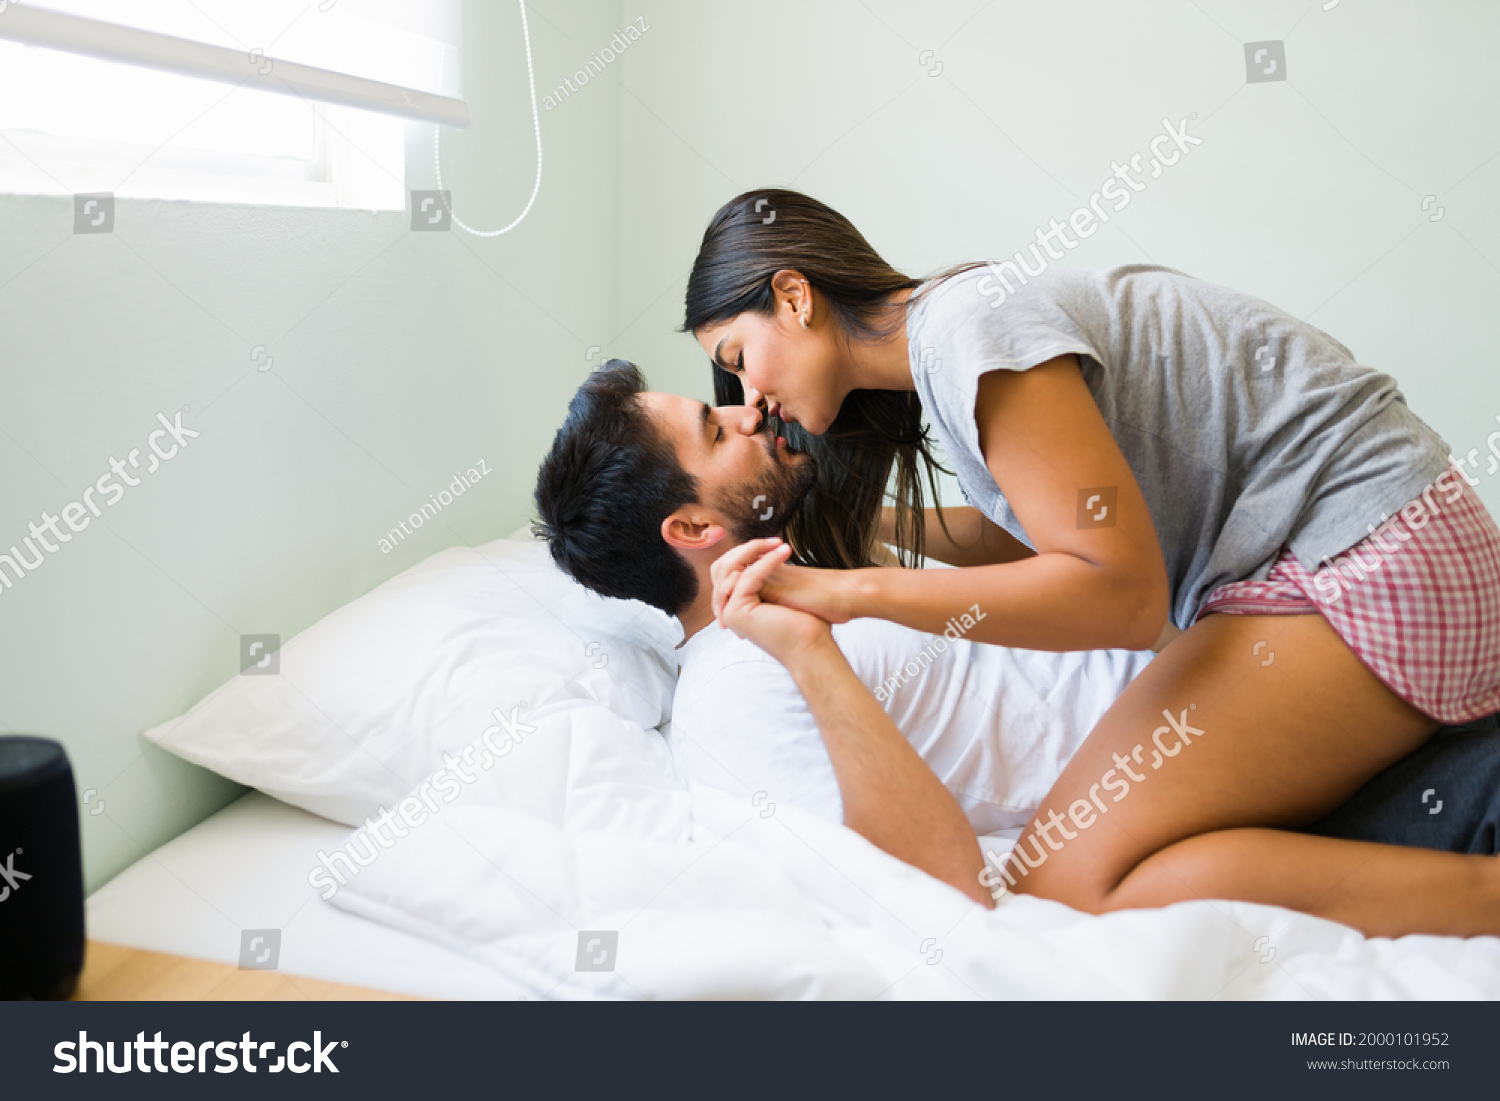 Девушка соблазняет парня на кровати